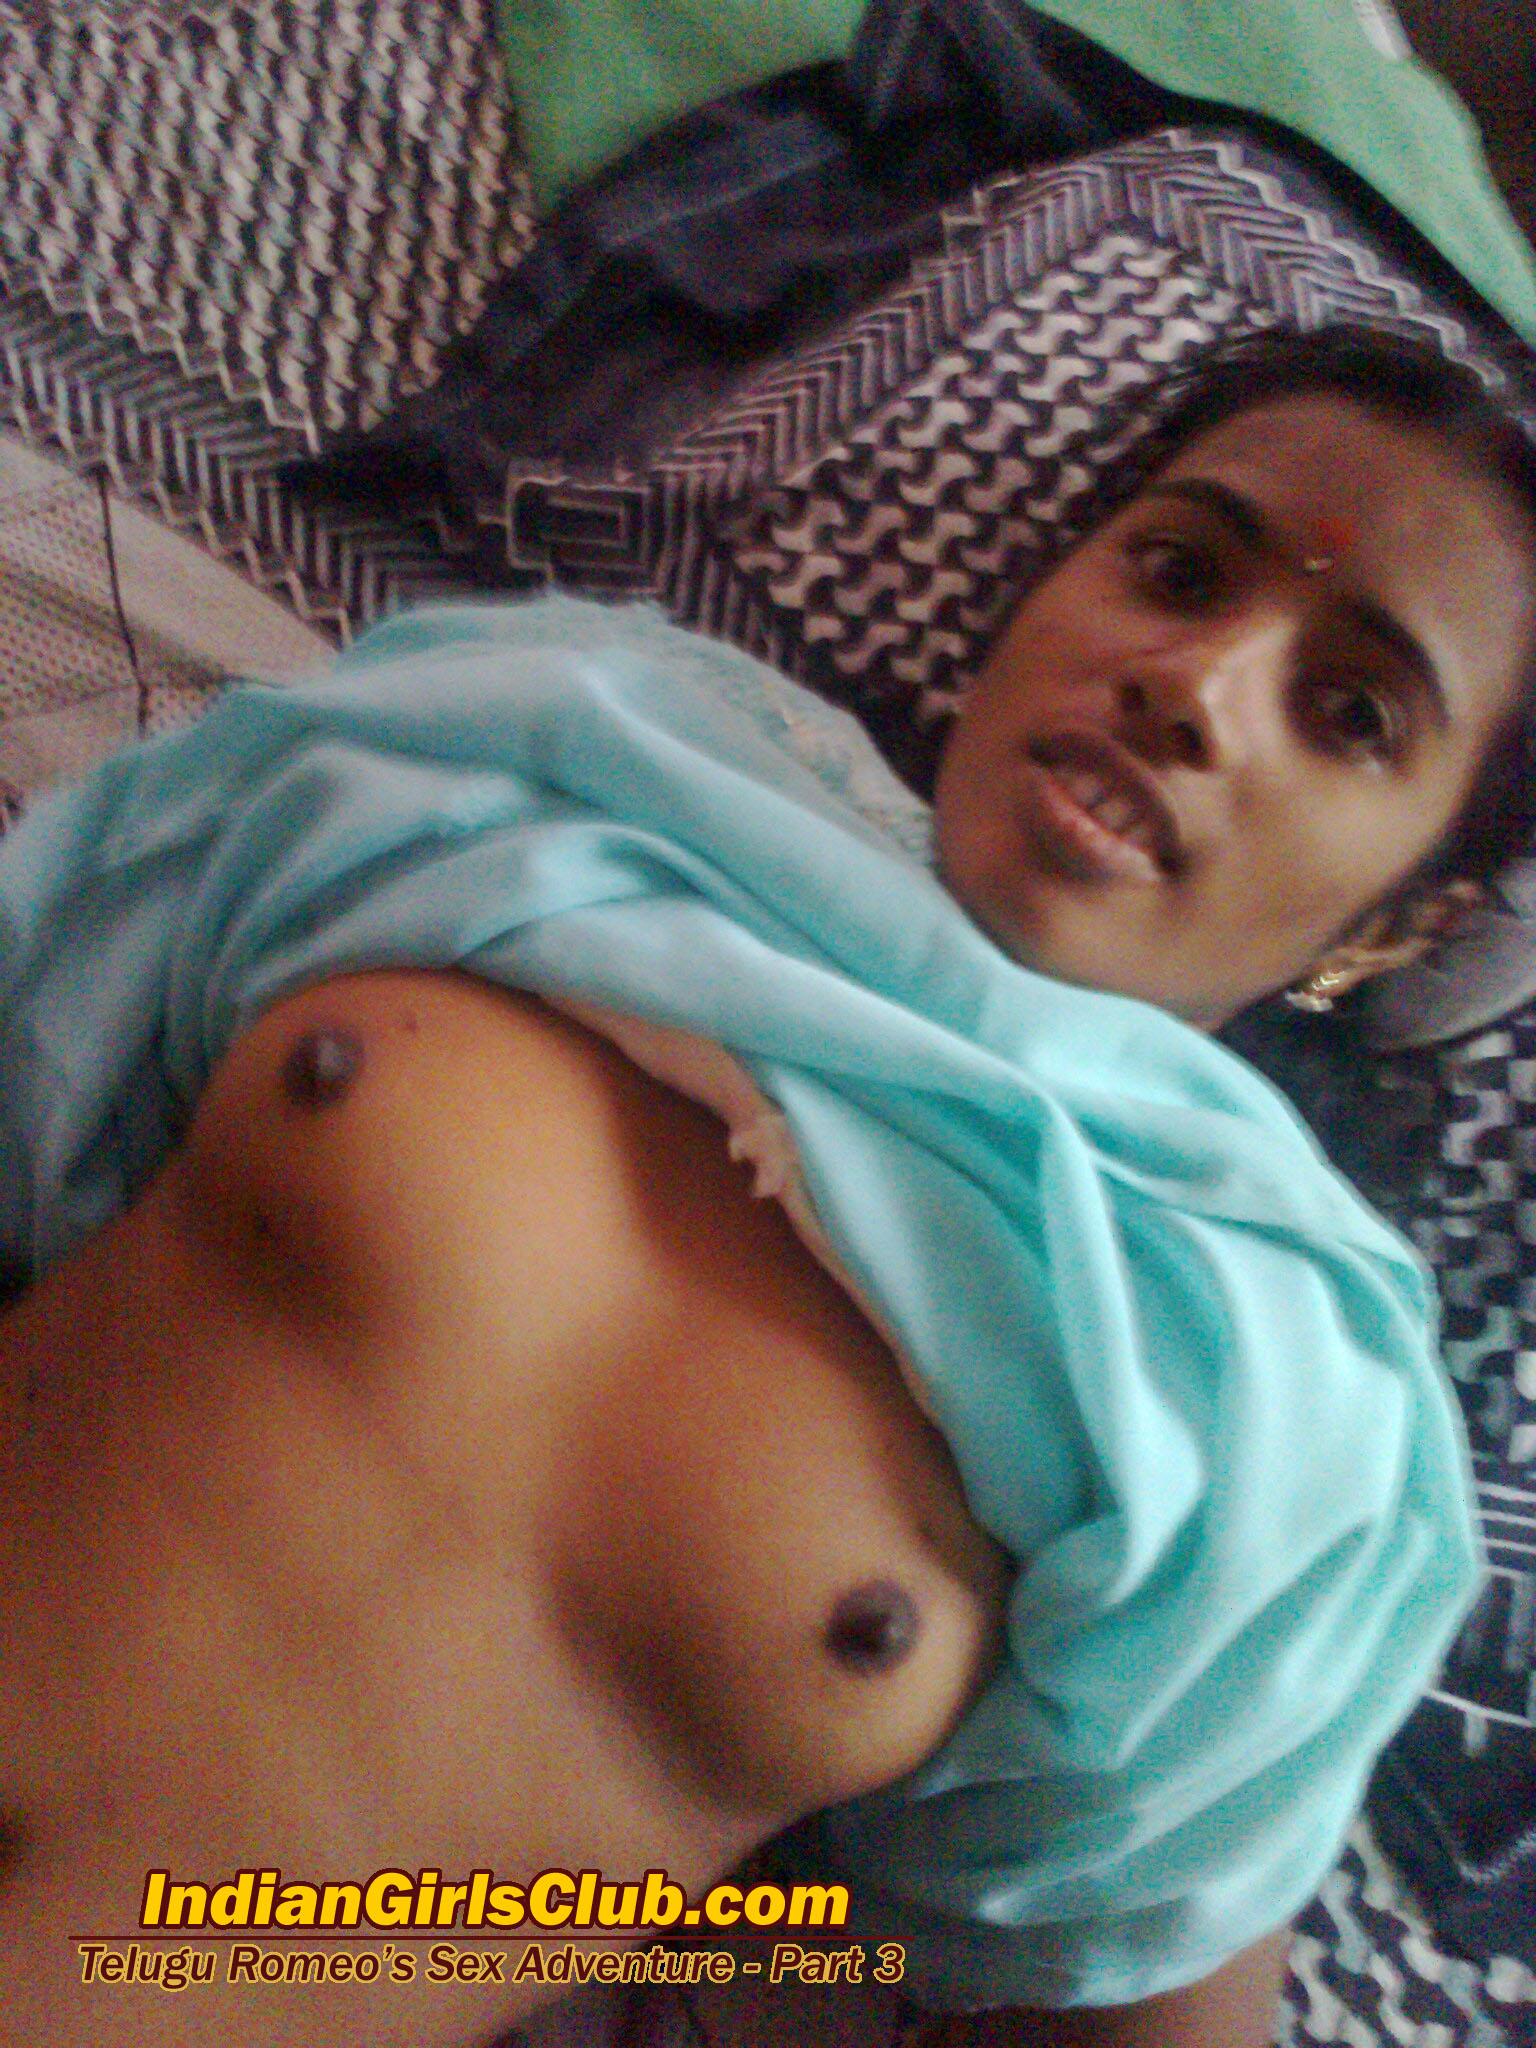 Naked Tamil Sex - Tamil masala sex story | 19 New Pics